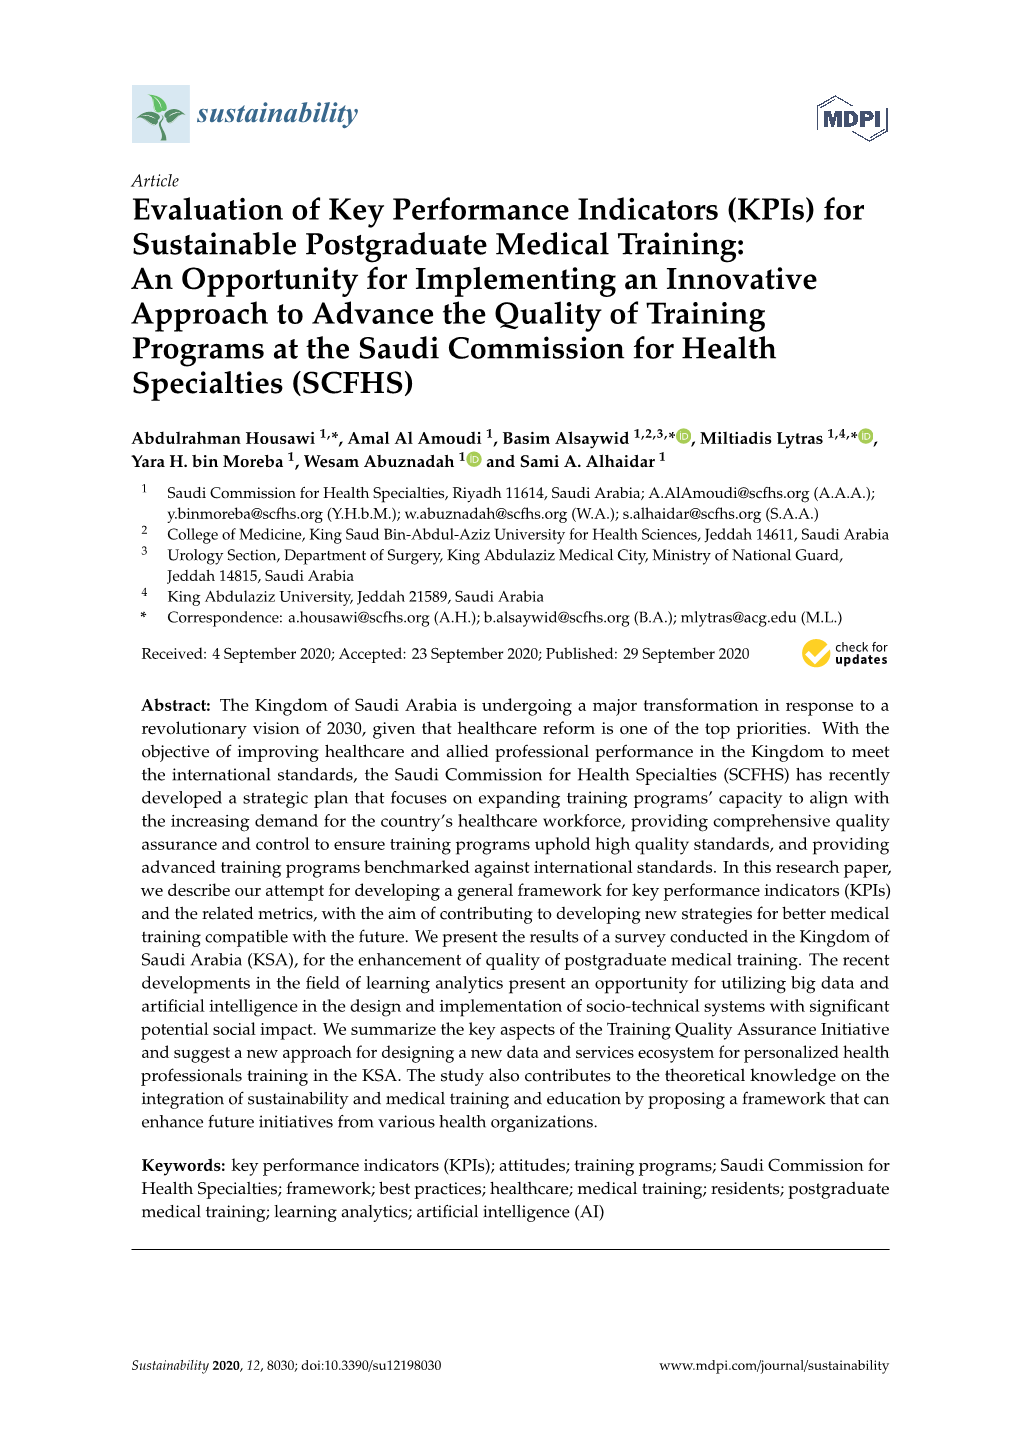 Evaluation of Key Performance Indicators (Kpis) for Sustainable Postgraduate Medical Training